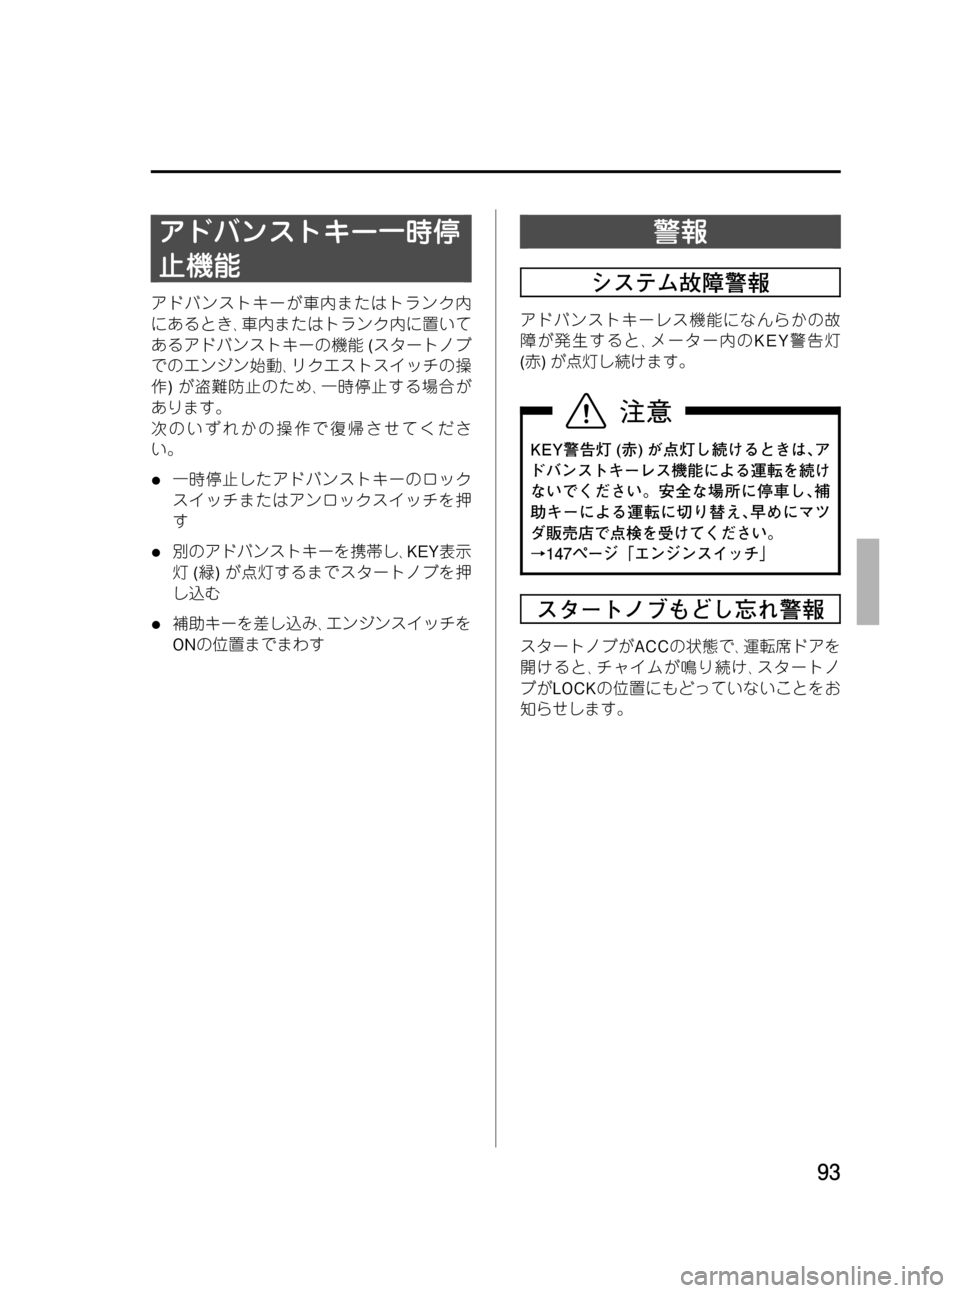 MAZDA MODEL RX 8 2008  取扱説明書 (in Japanese) Black plate (93,1)
アドバンストキー一時停
止機能
アドバンストキーが車内またはトランク内
にあるとき､車内またはトランク内に置いて
あるアドバン